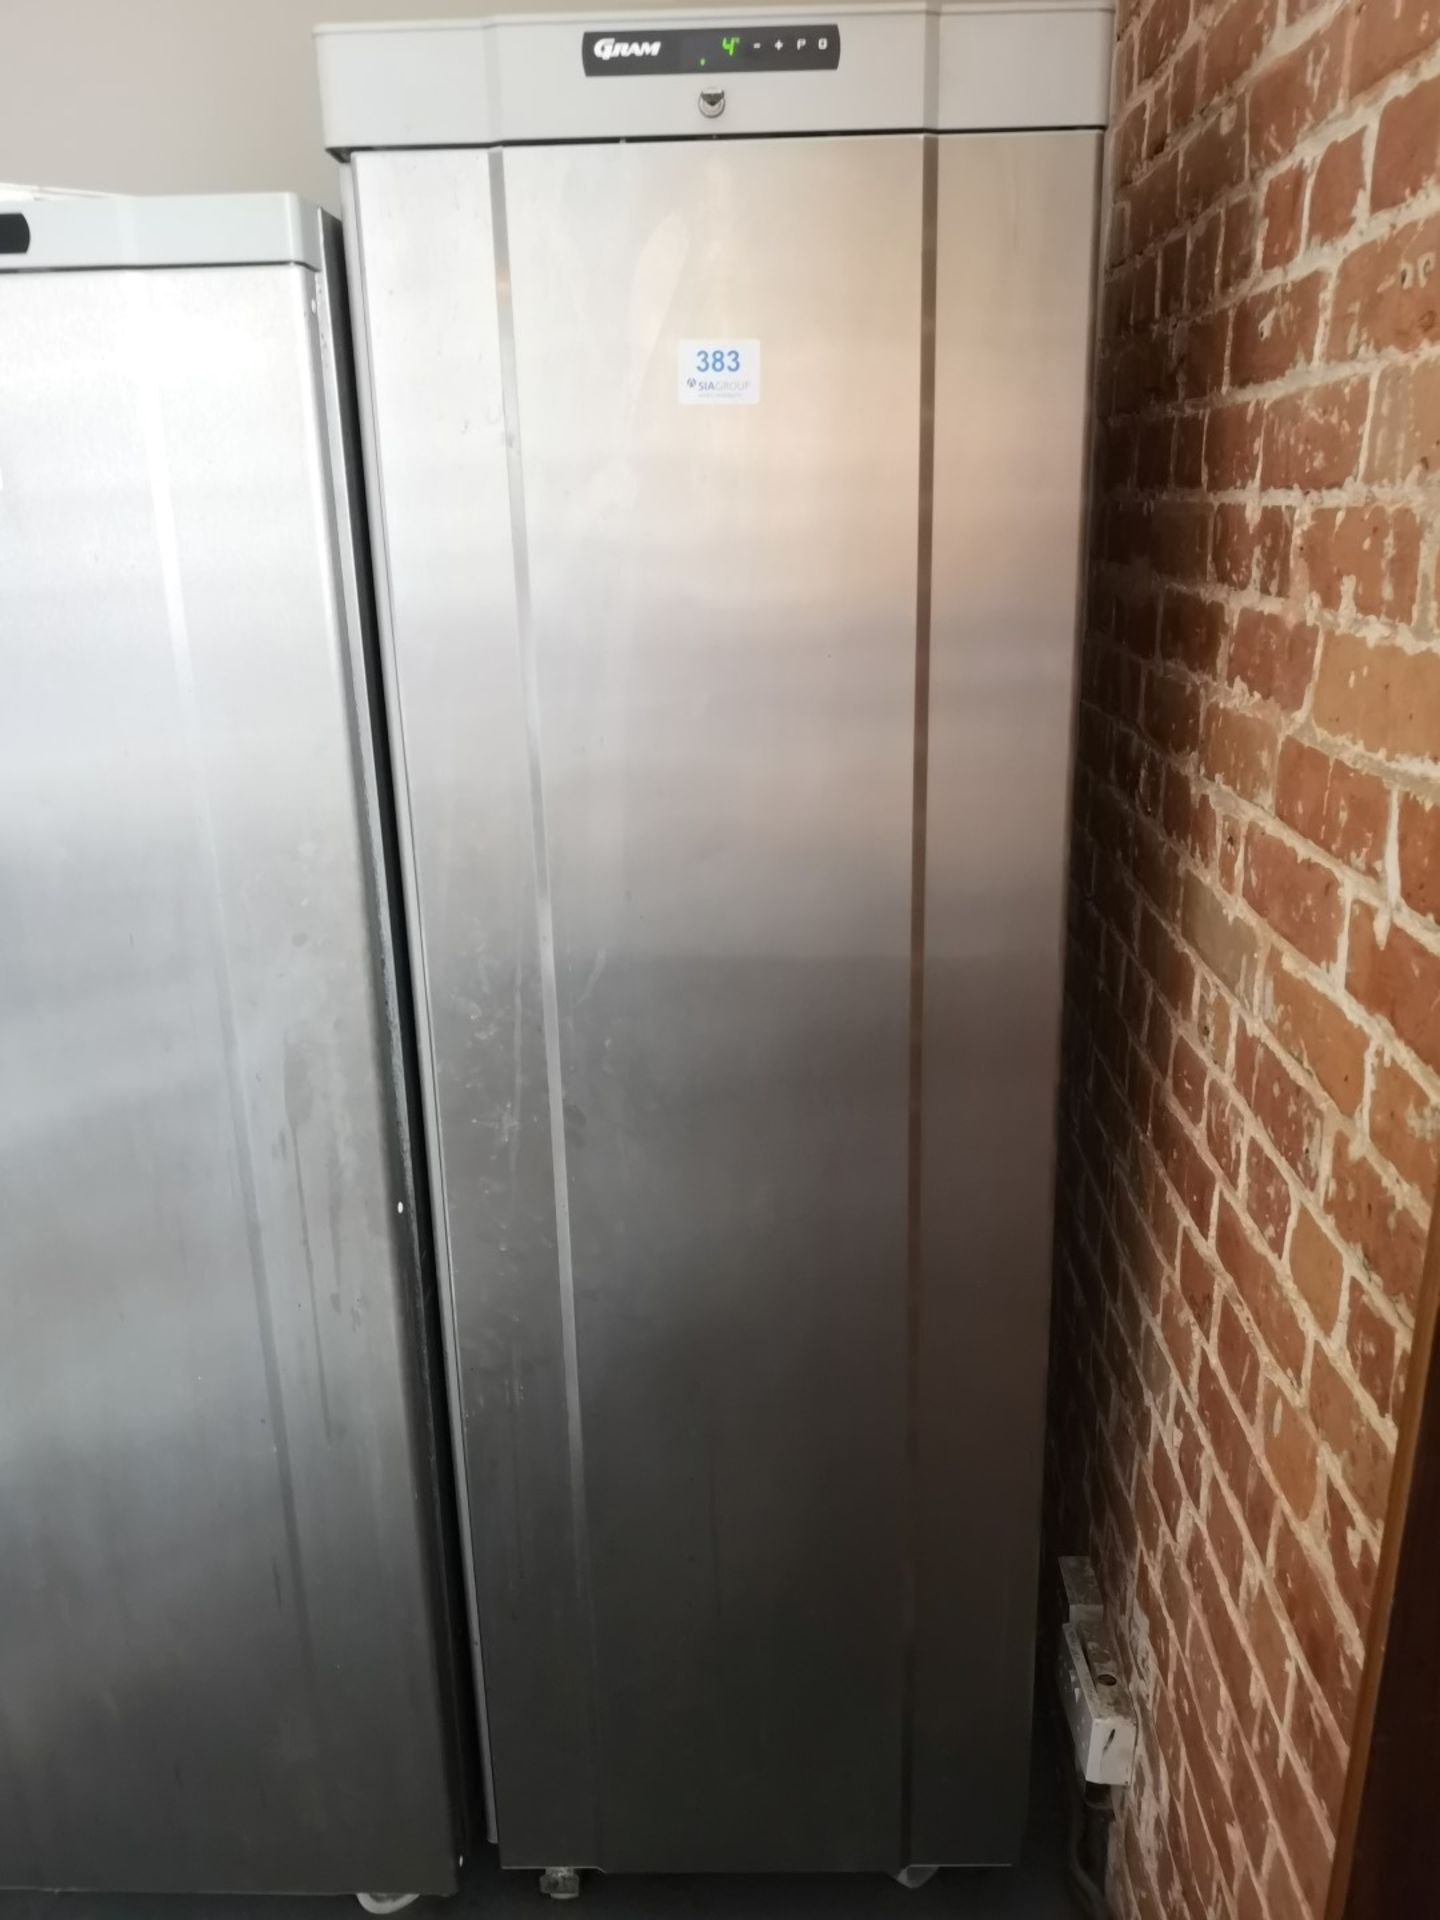 Gram Stainless Steel Single Door Refrigerator